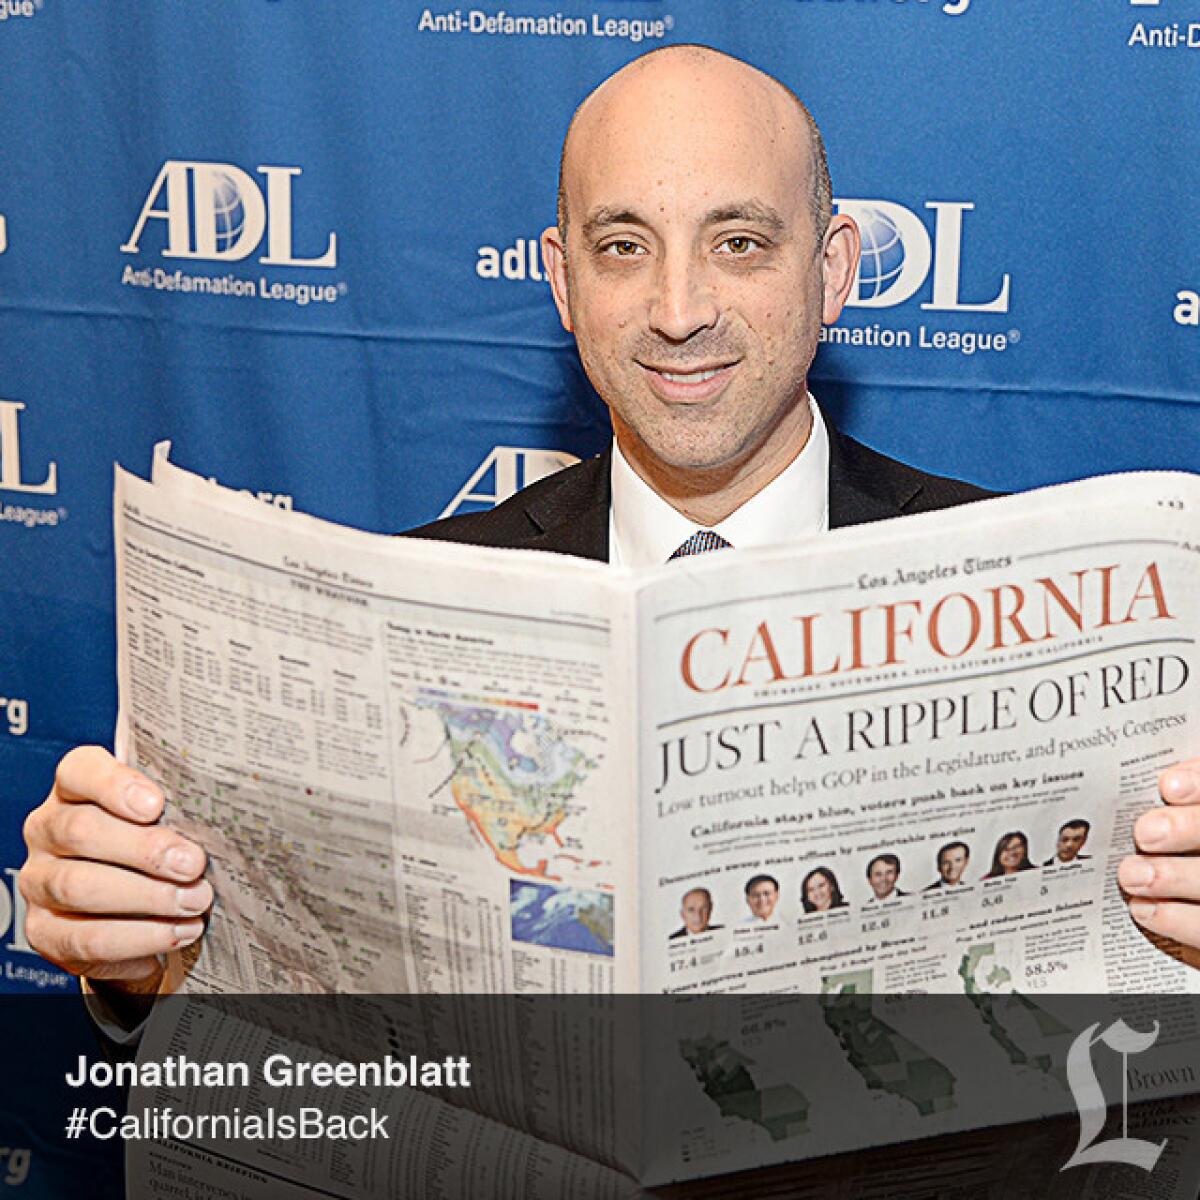 Jonathan Greenblatt, incoming National Director of the Anti-Defamation League.